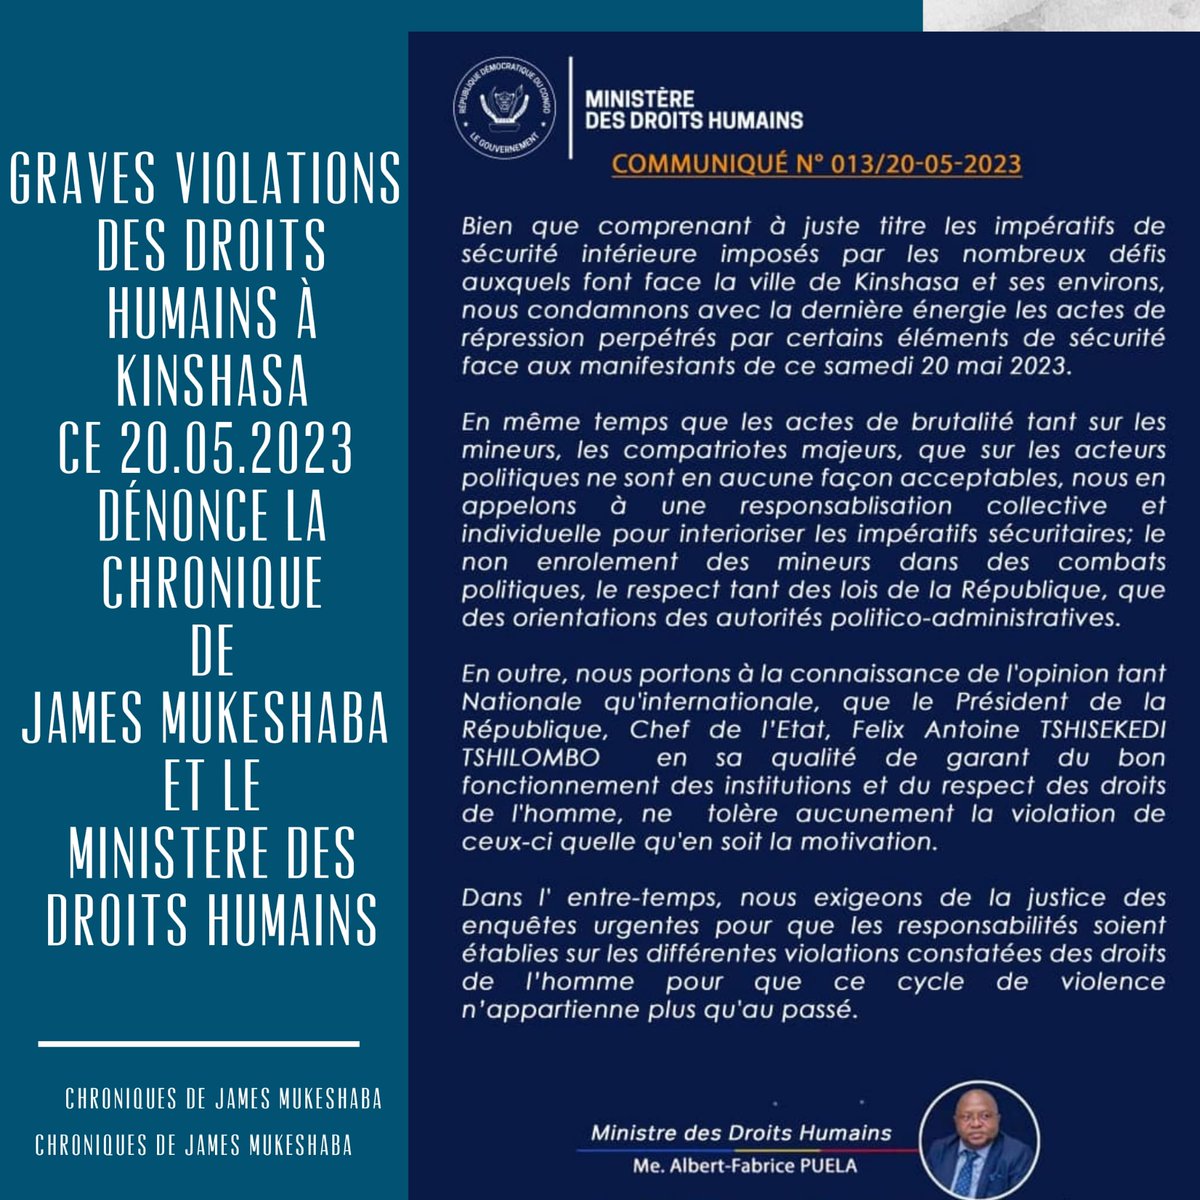 GRAVES VIOLATIONS DES DROITS HUMAINS À KINSHASA CE 20.05.2023 DENONCE LA CHRONIQUE DE JAMES MUKESHABA ET LE MINISTÈRE DES DROITS HUMAINS.
@atu_kamola @benbabunga @AlainMake20 @UNHumanRights @DROITSdelHOMME @EURightsAgency @StanysBujakera